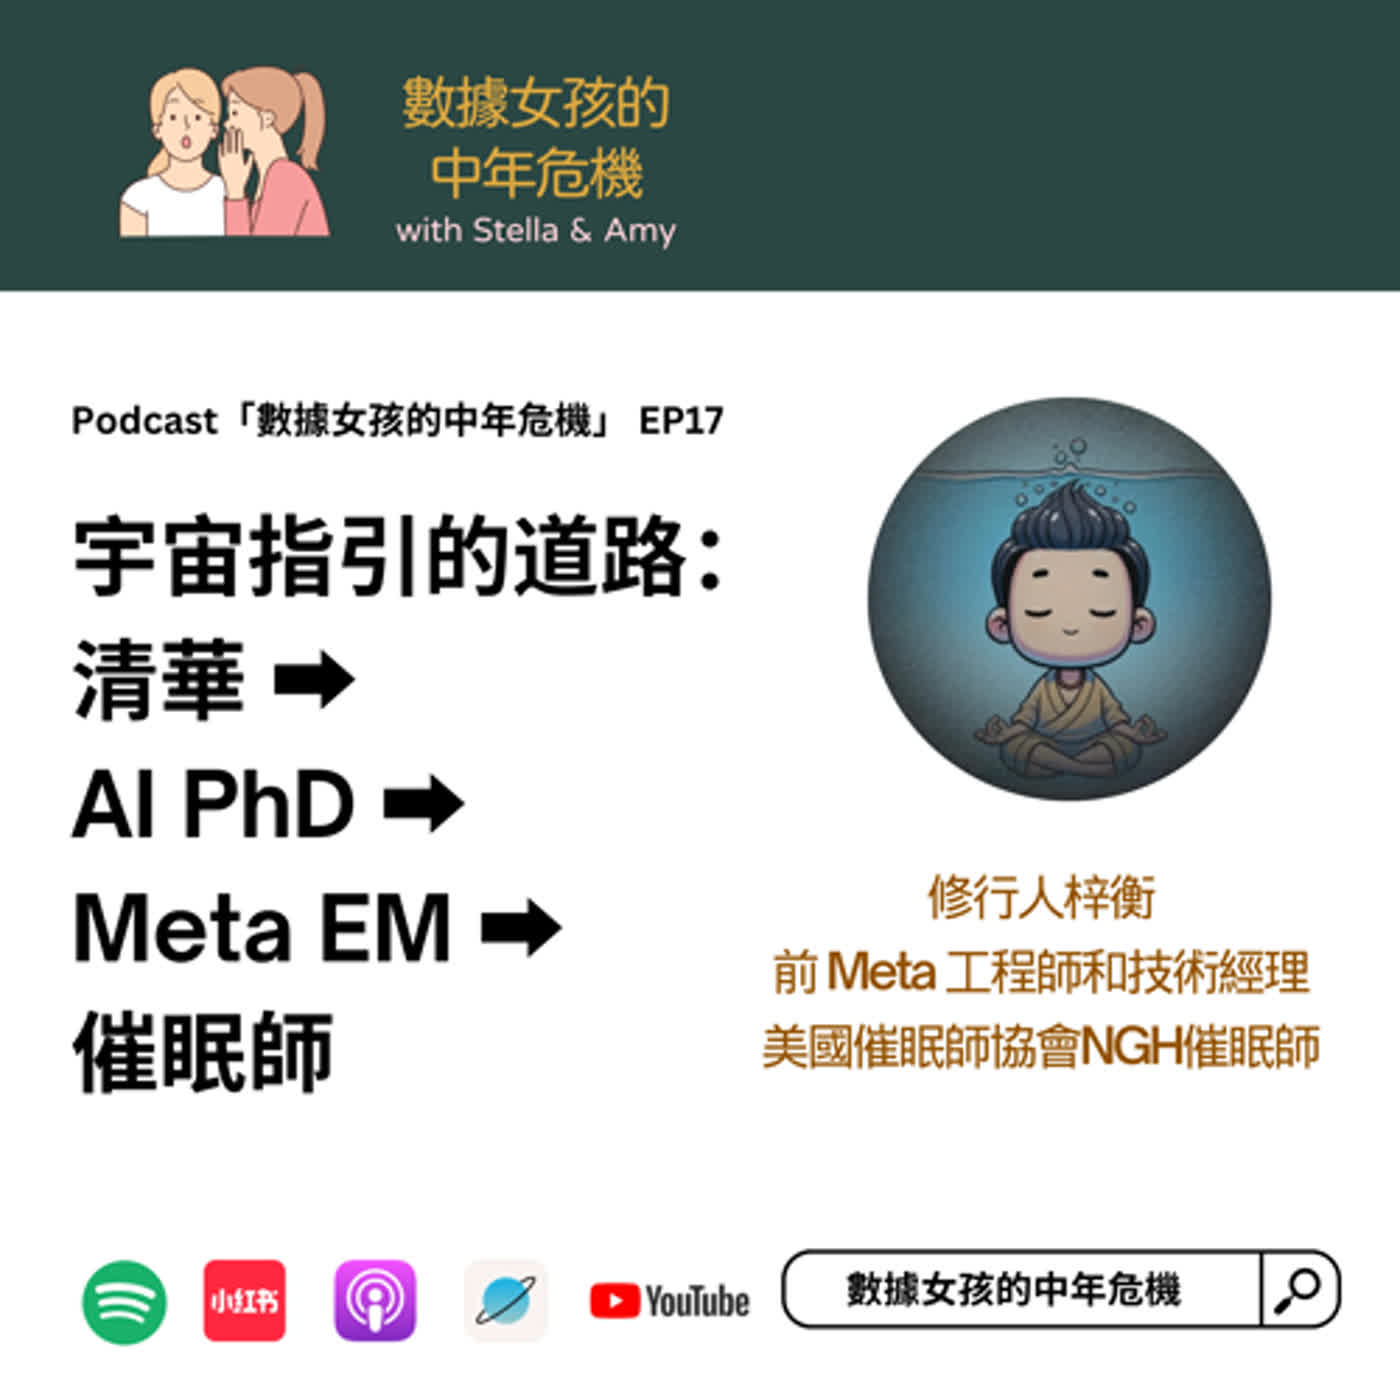 EP17: 清華→ AI PhD→ Meta EM→ 催眠師